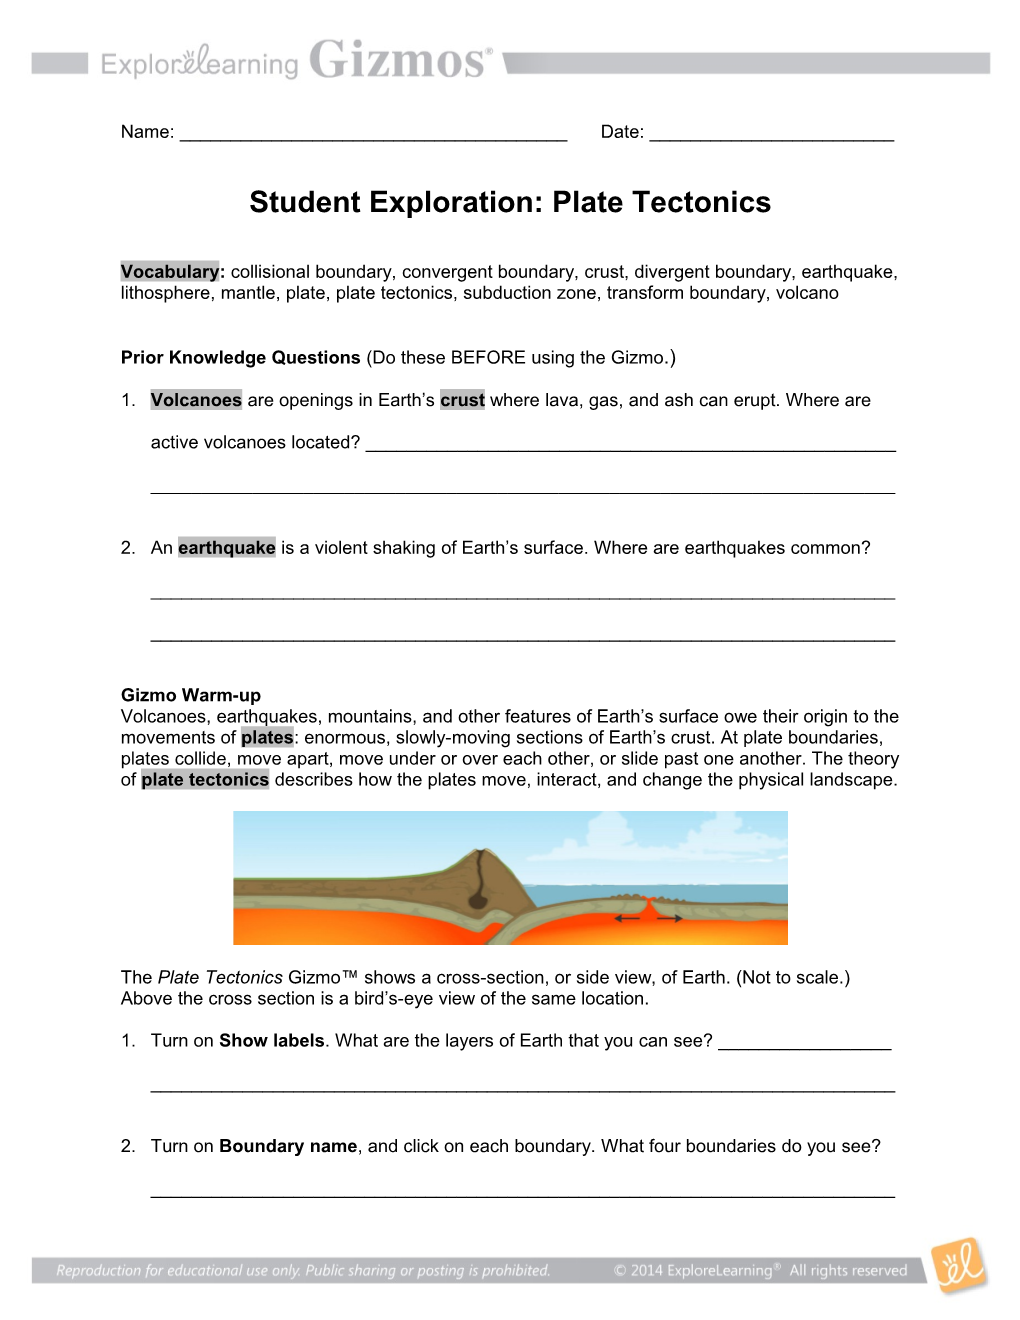 Student Exploration: Plate Tectonics